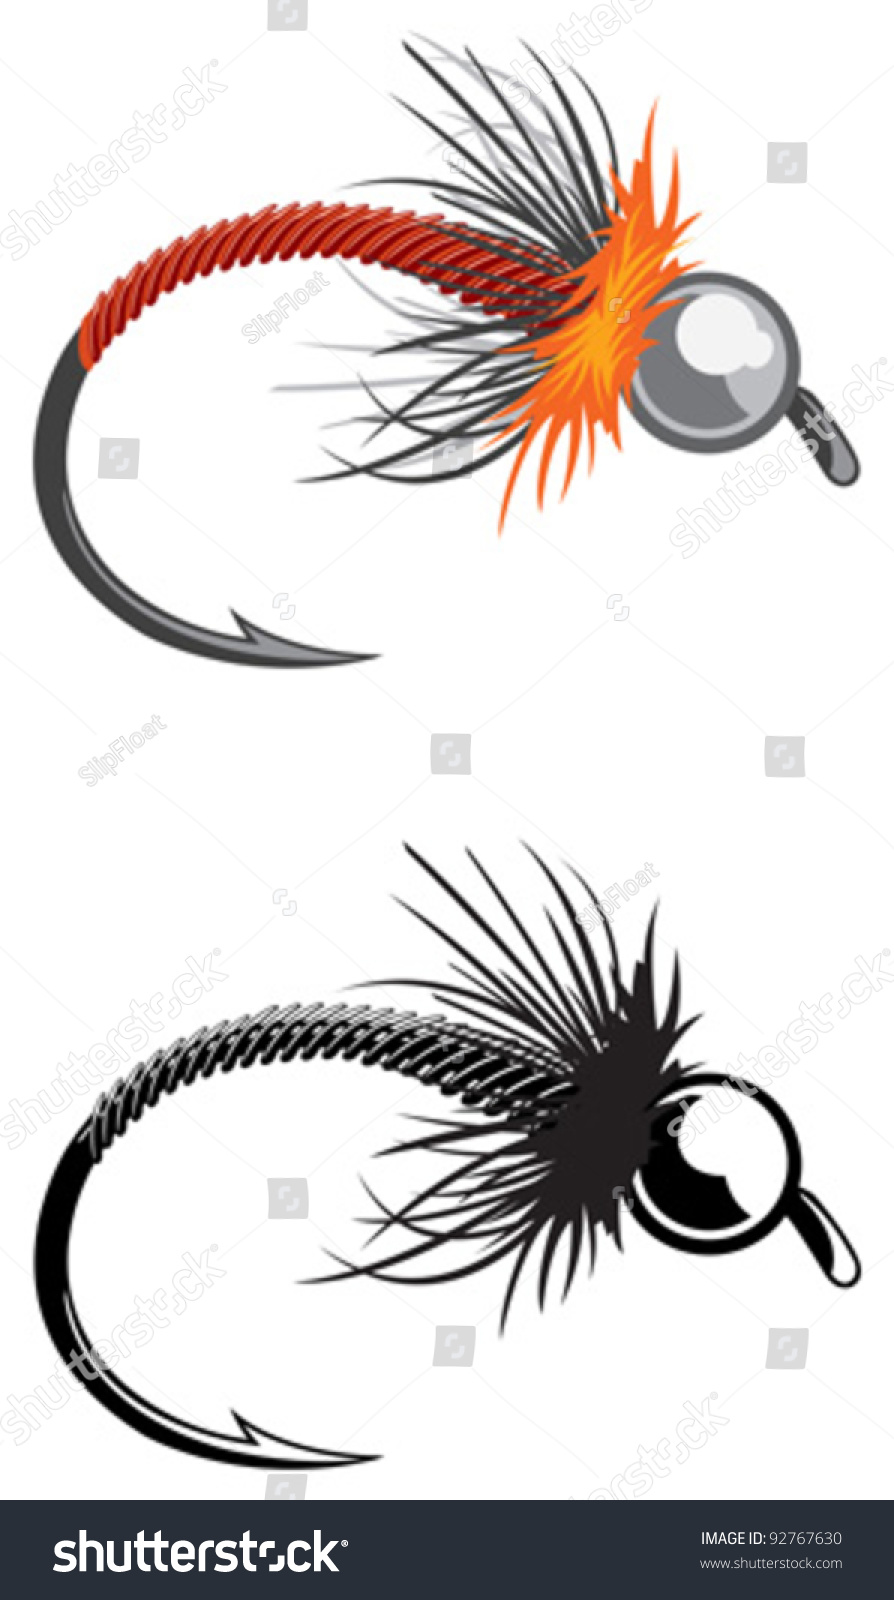 Fishing Lure Stock Vector Illustration 92767630 : Shutterstock